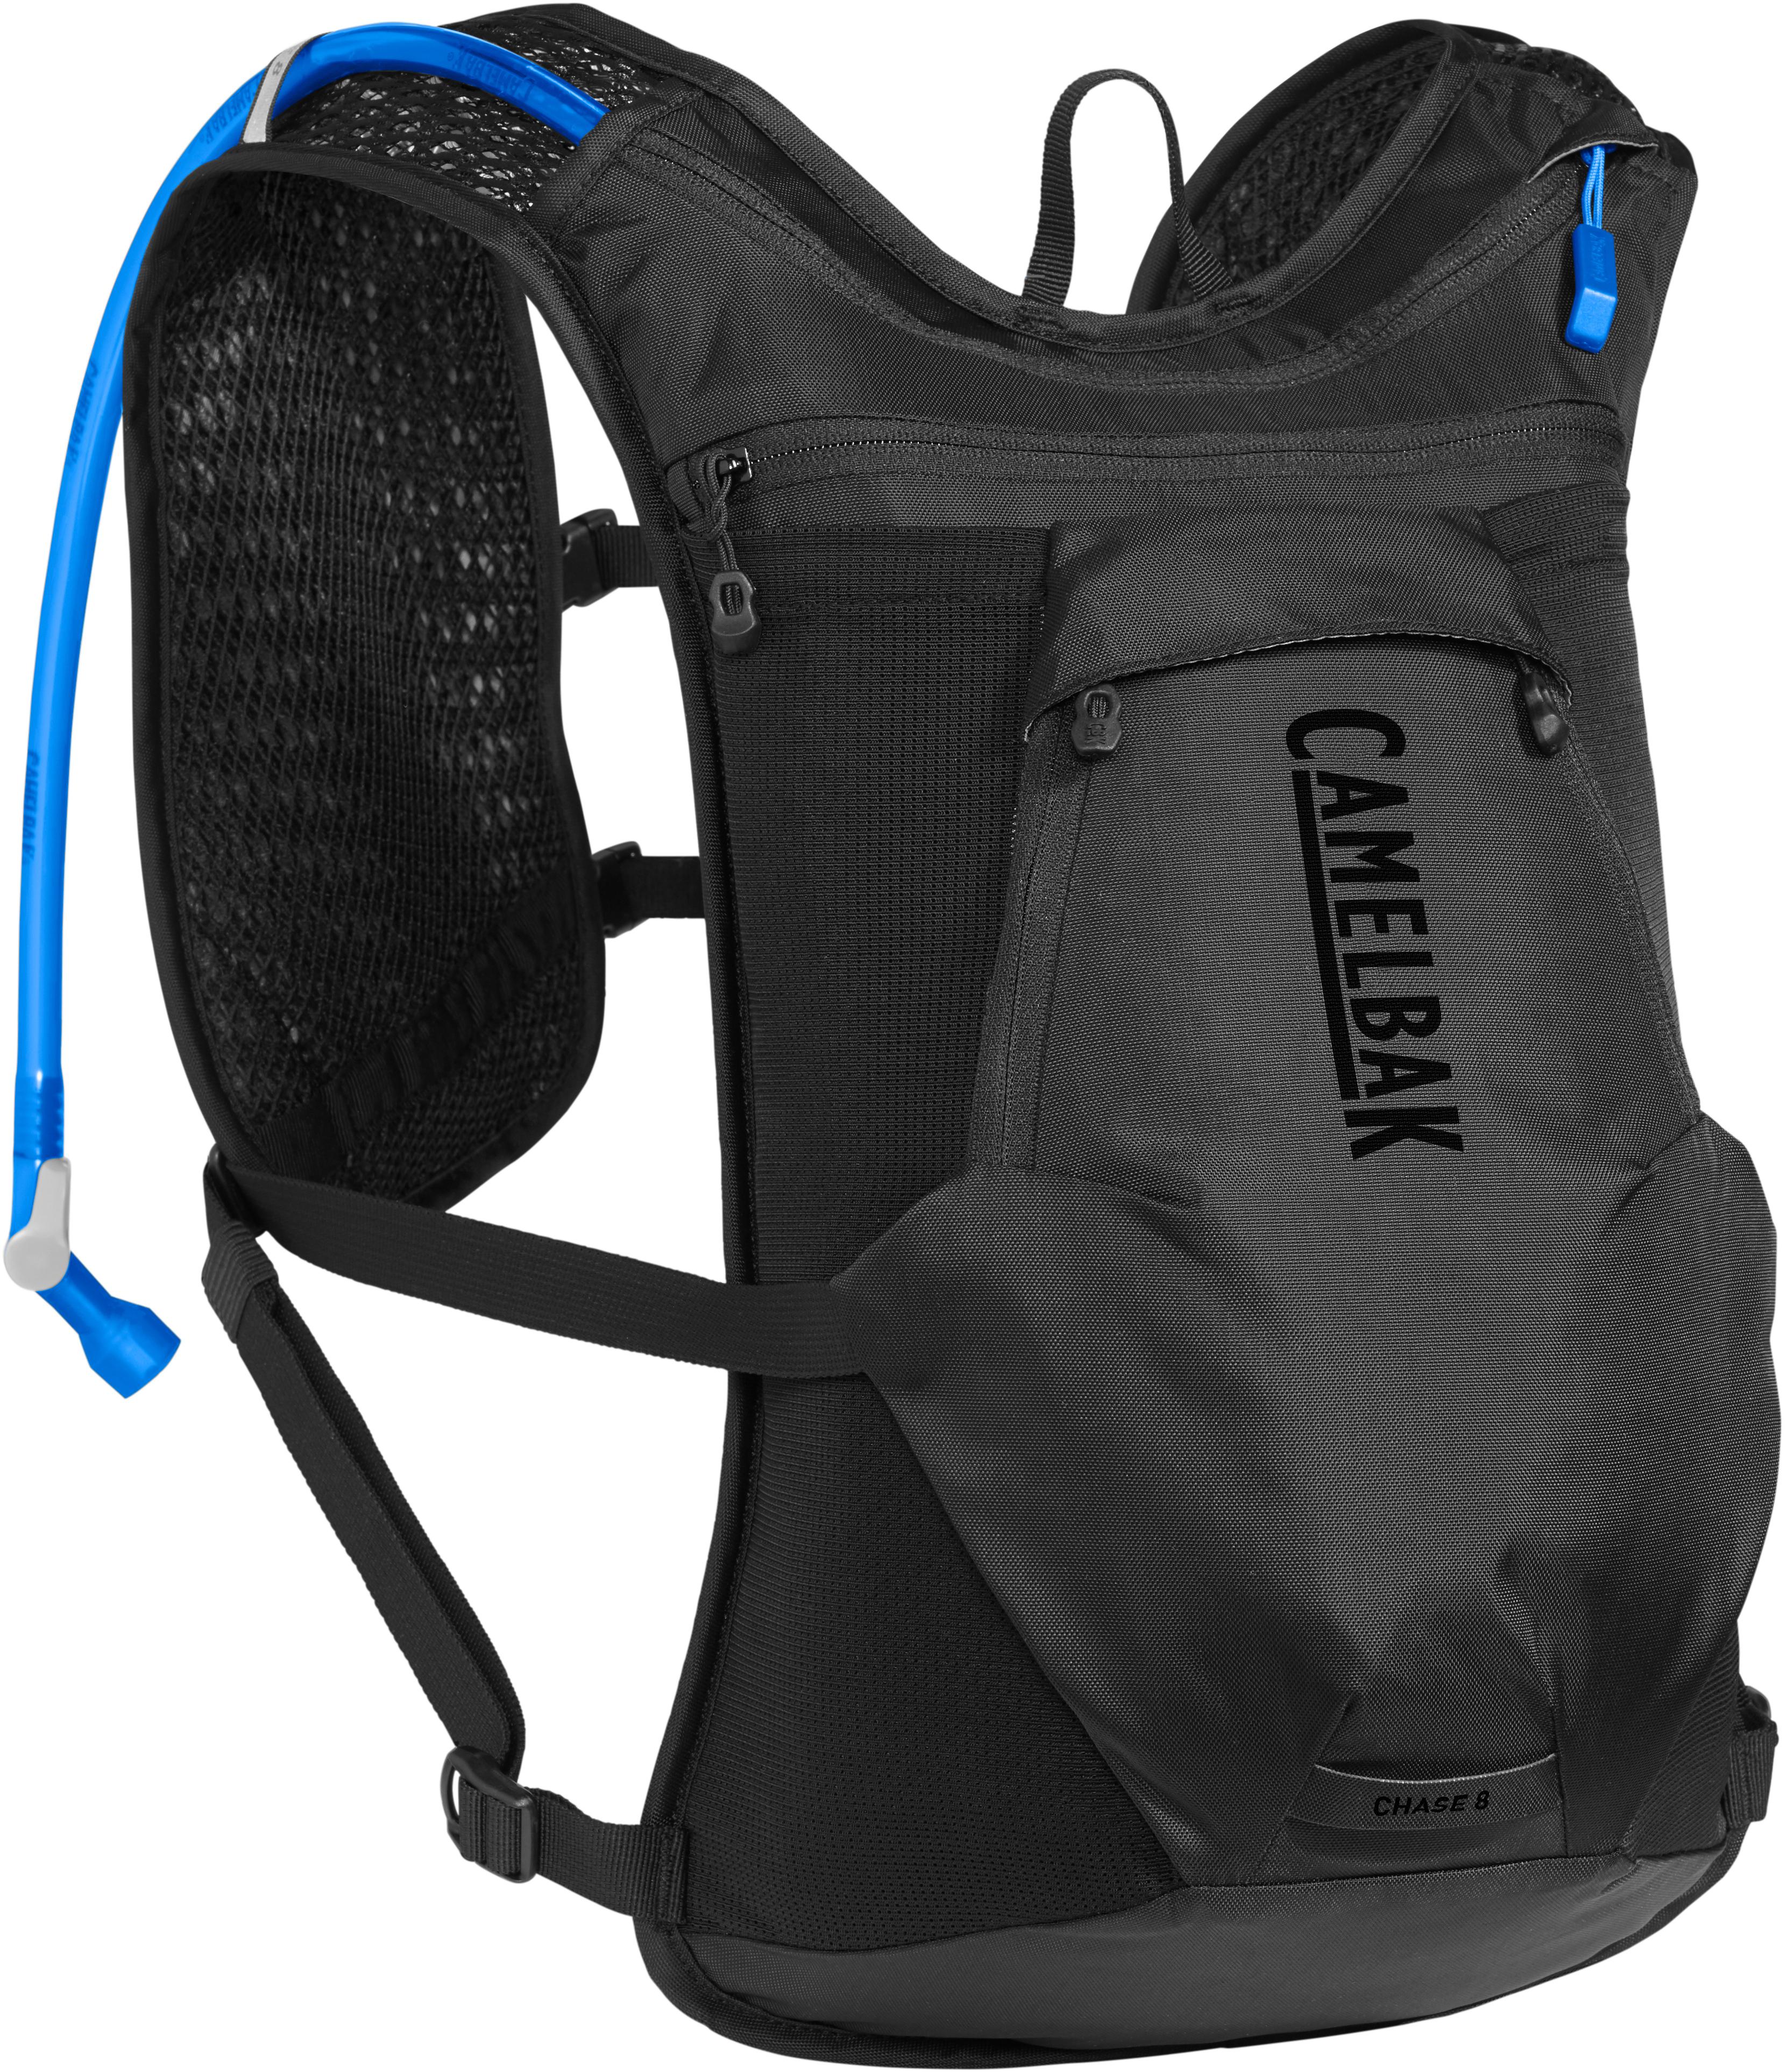 Camelbak Chase 8 Bike Vest Hydration Pack 2020: Black 2L/70Oz